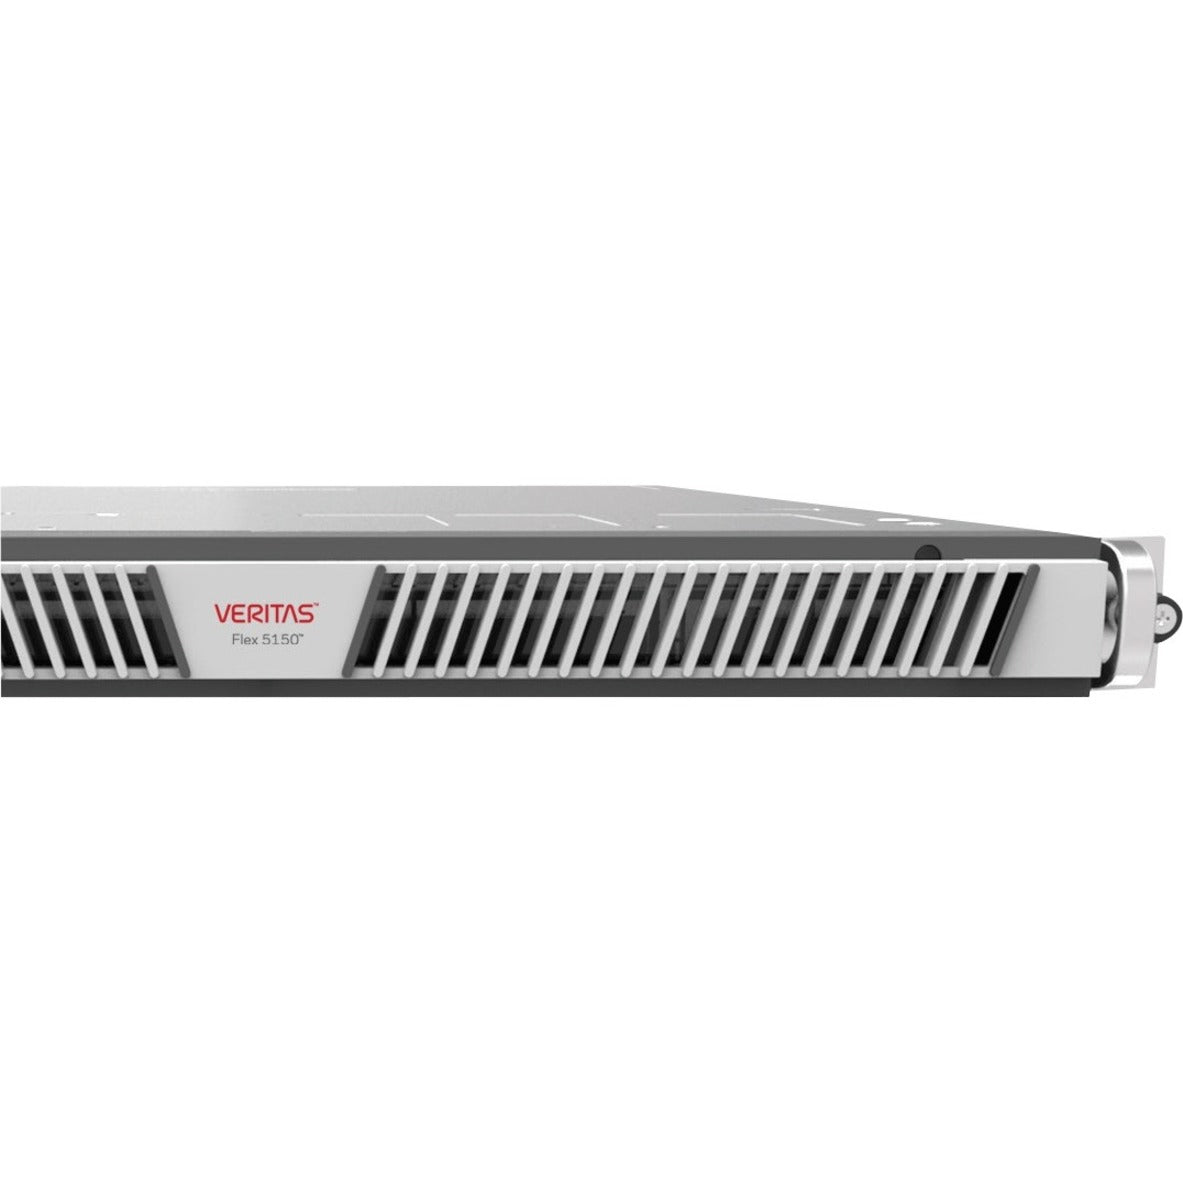 Veritas 26118-M4213 Flex System 5150 NAS Storage System, 15TB Total Hard Drive Capacity Installed, 12Gb/s SAS Controller, 8 Network (RJ-45) Ports